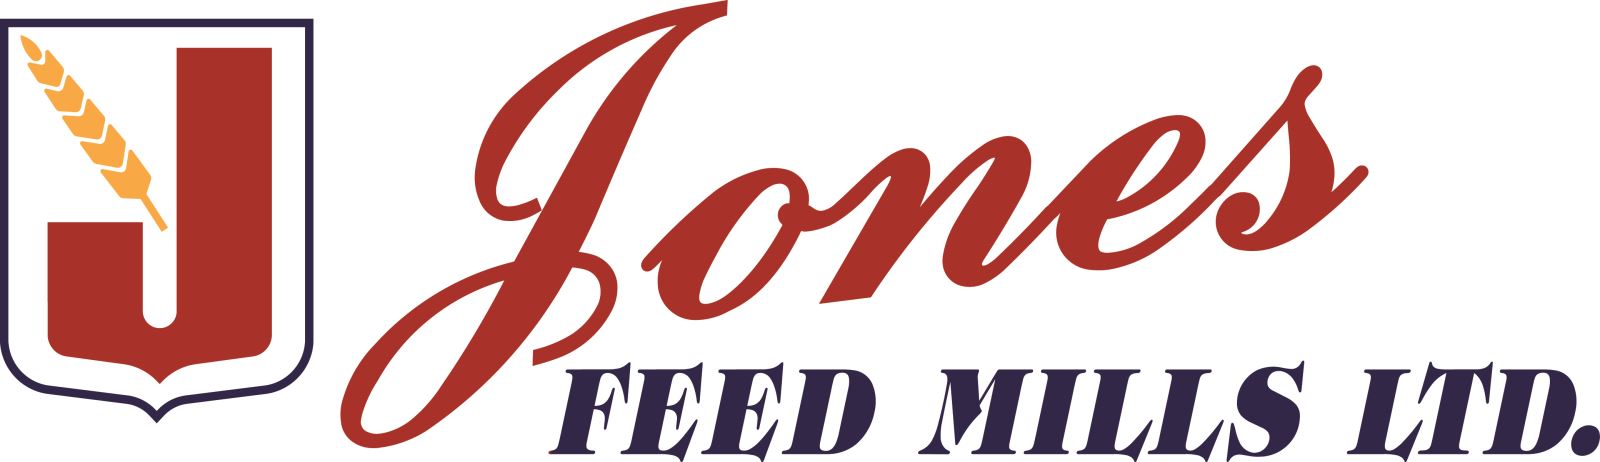 Jones Seed and Feed